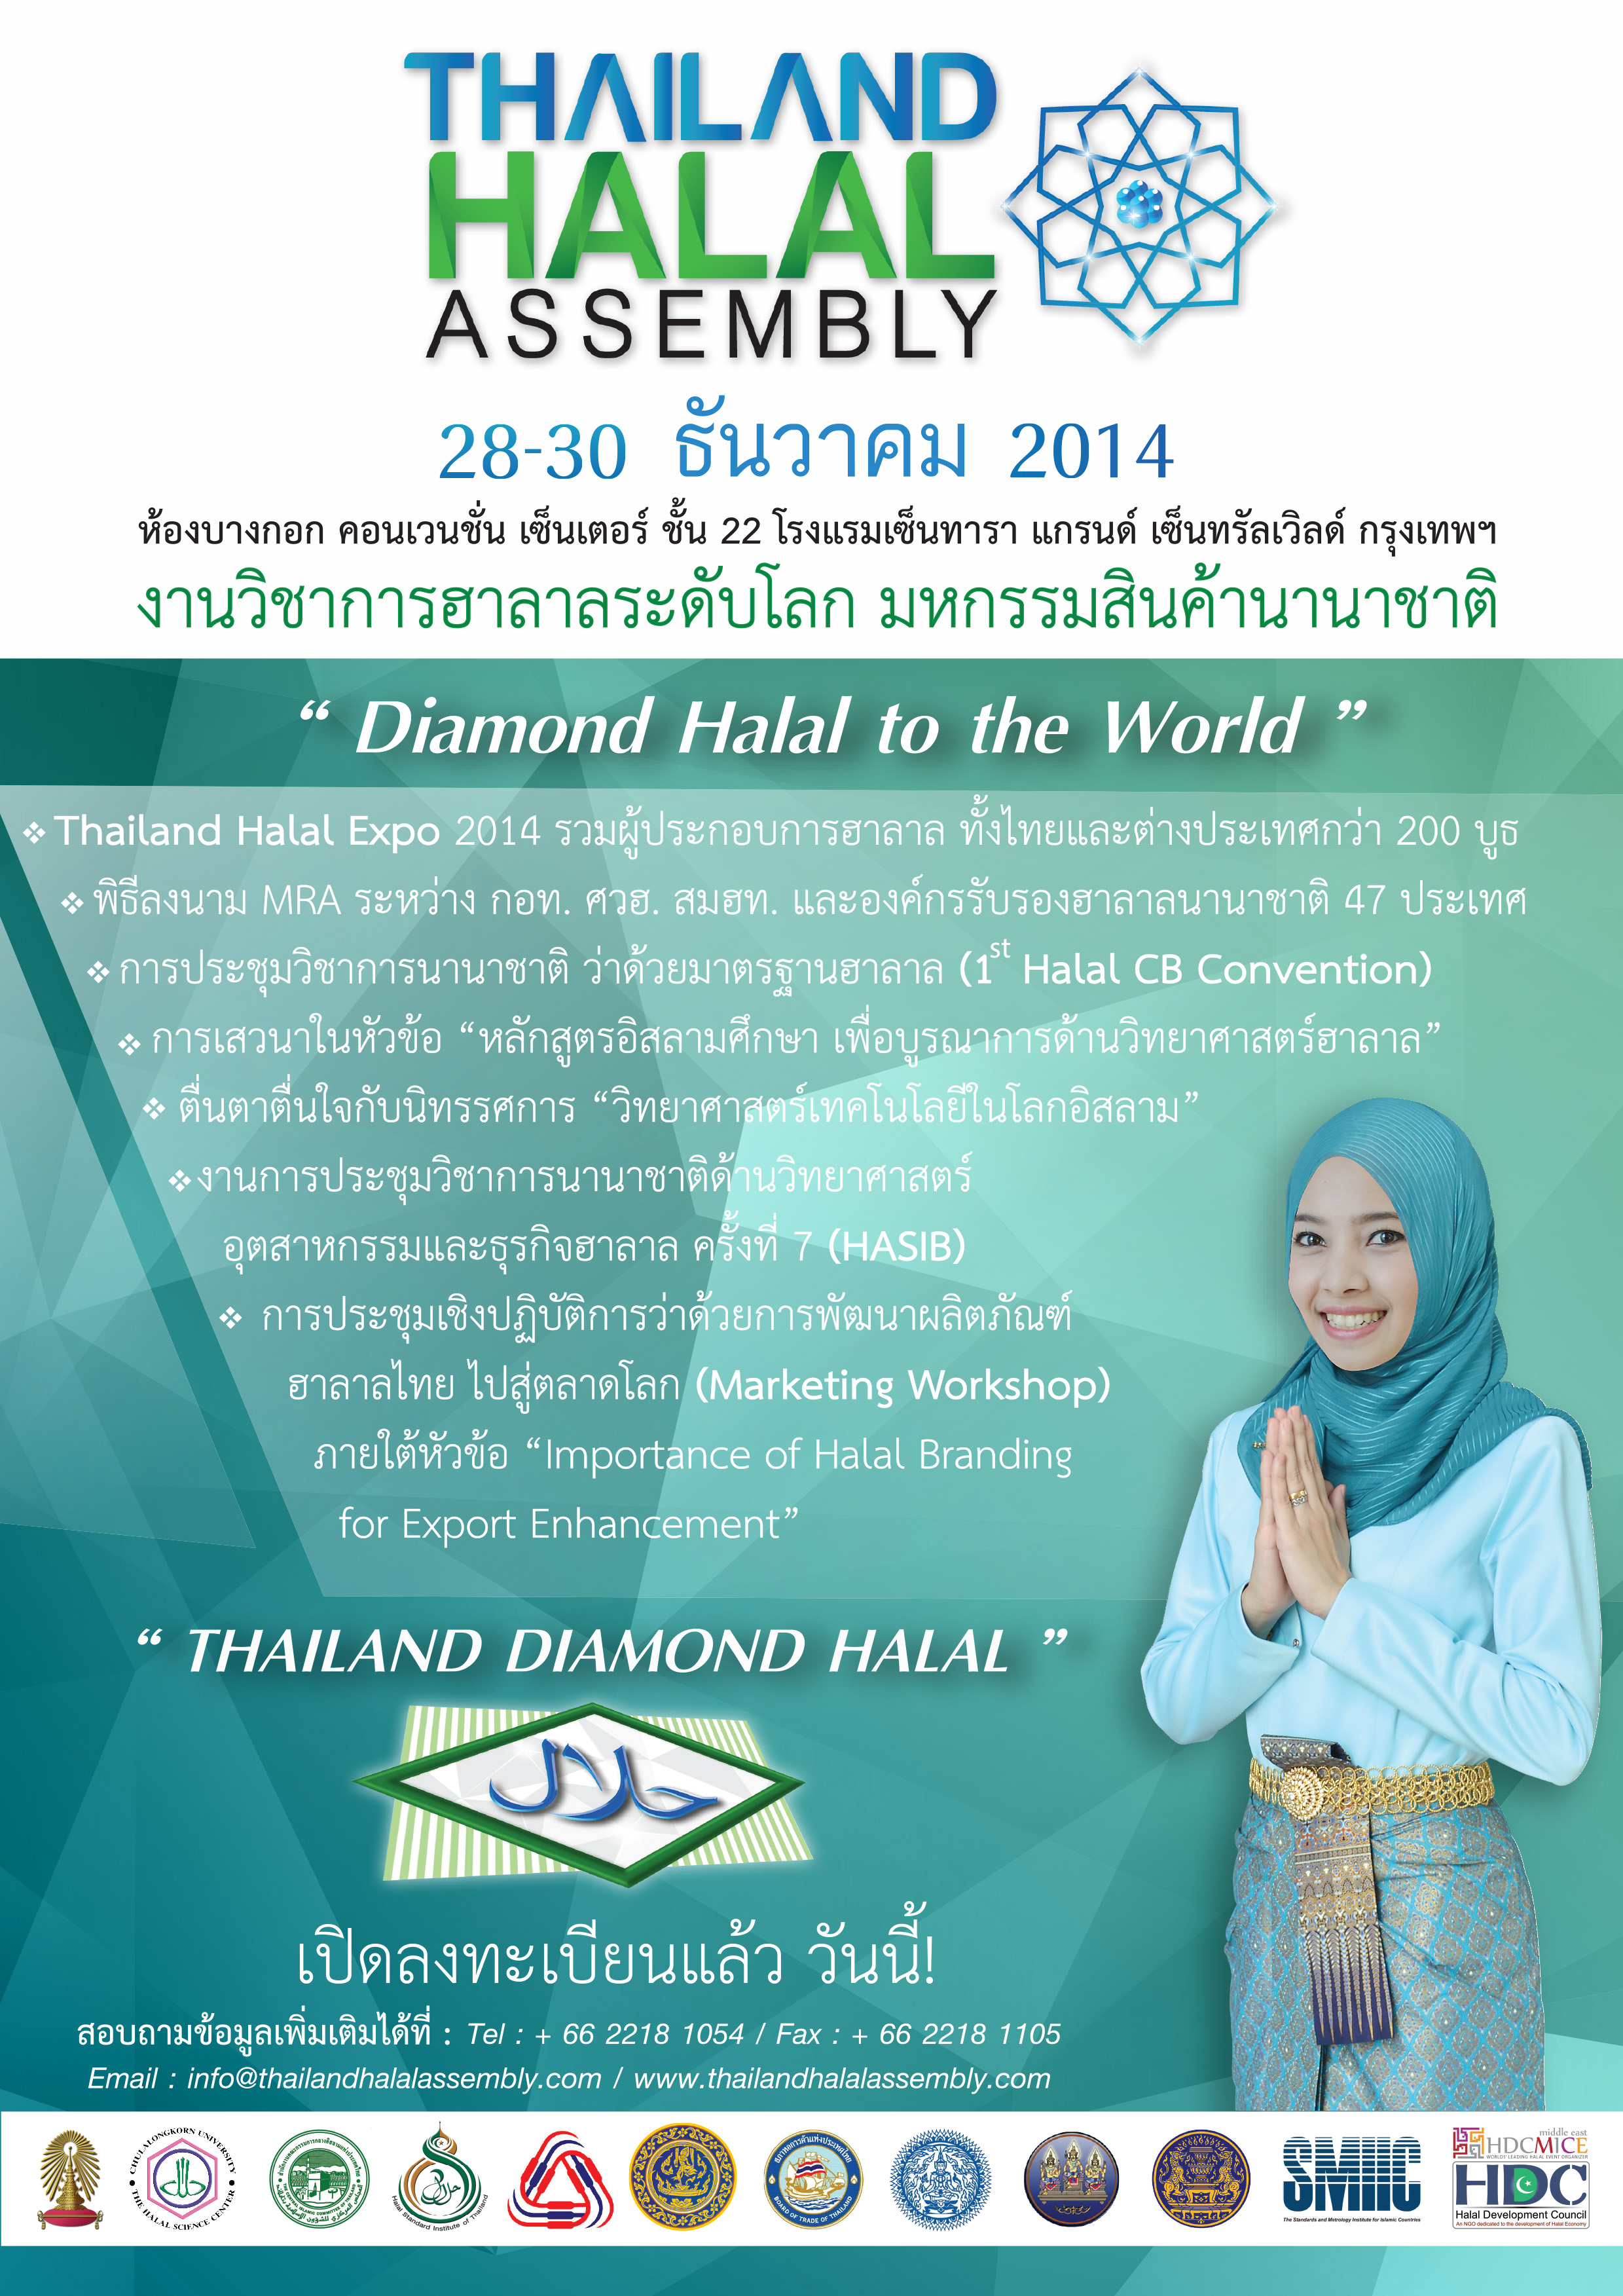 Thailand Halal Assembly 2014